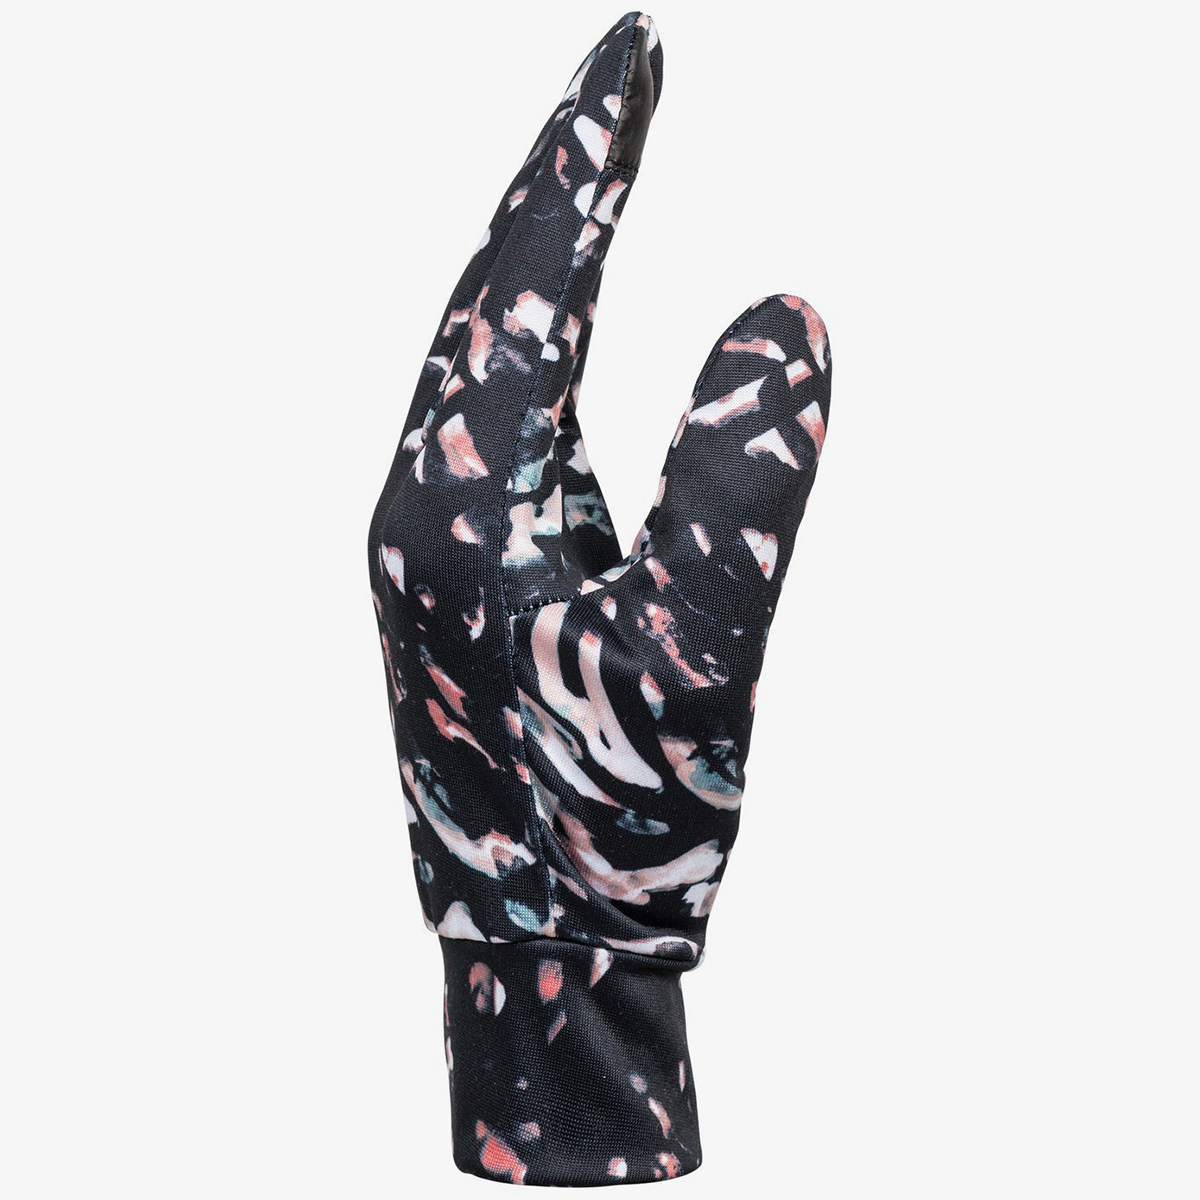 Перчатки сноубордические roxy купить. Roxy Hydrosmart перчатки. Roxy перчатки сноубордические женские. Сноубордические перчатки женские Roxy салатовые. Erjtj03318-kvj8 Roxy перчатки.